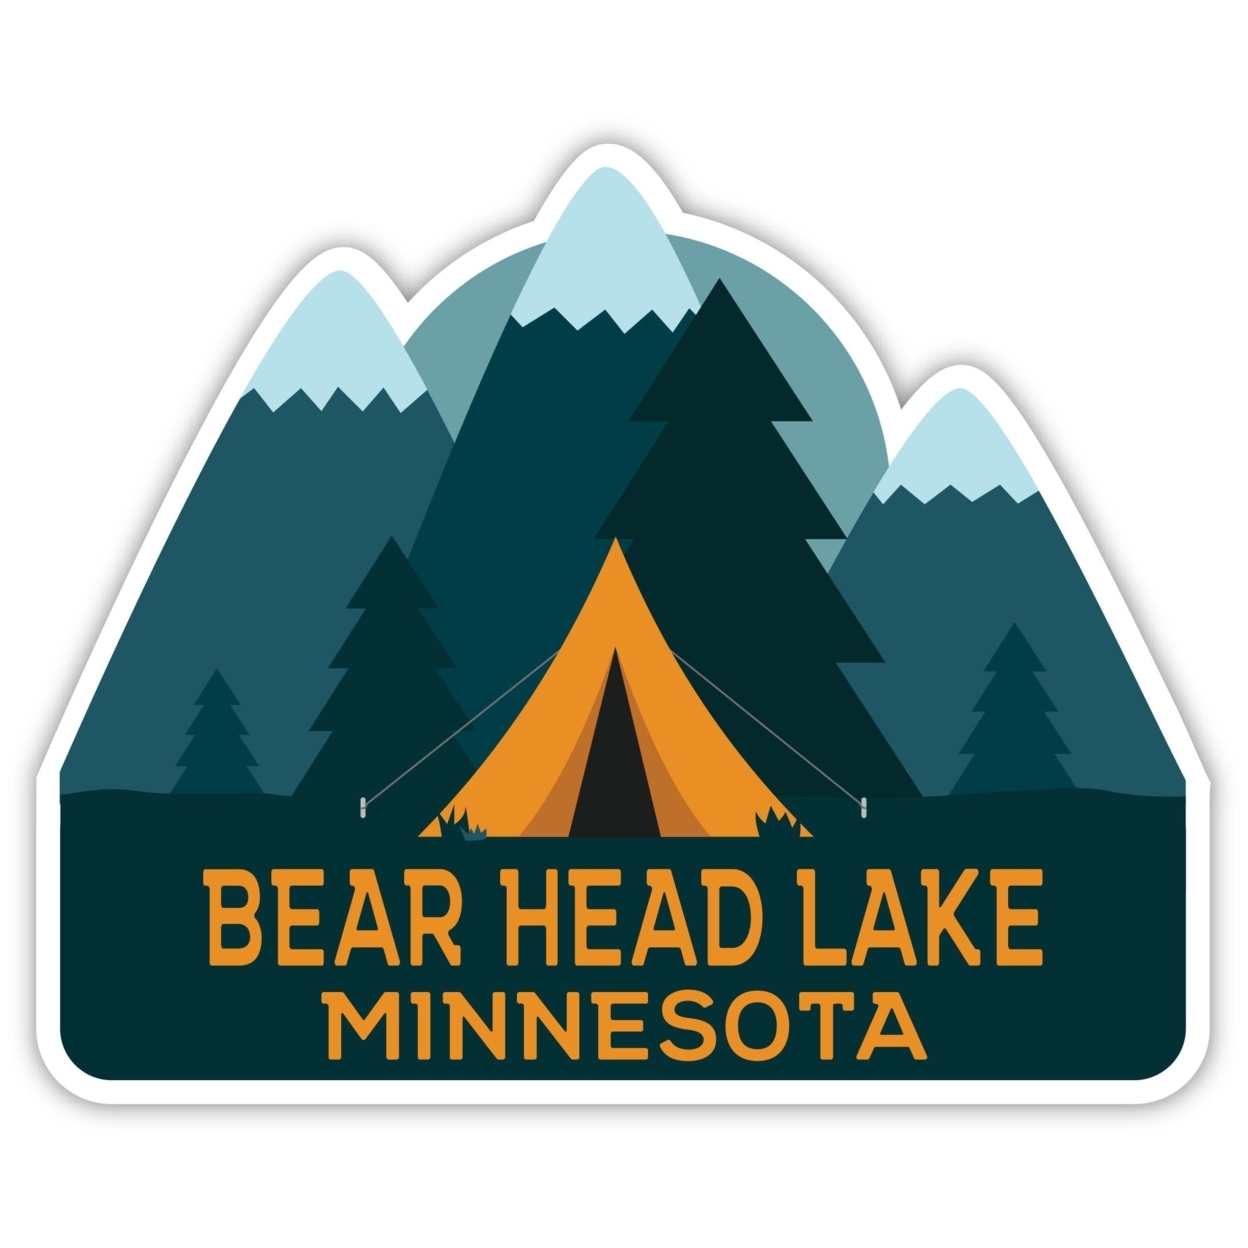 Bear Head Lake Minnesota Souvenir Decorative Stickers (Choose Theme And Size) - 4-Pack, 4-Inch, Tent